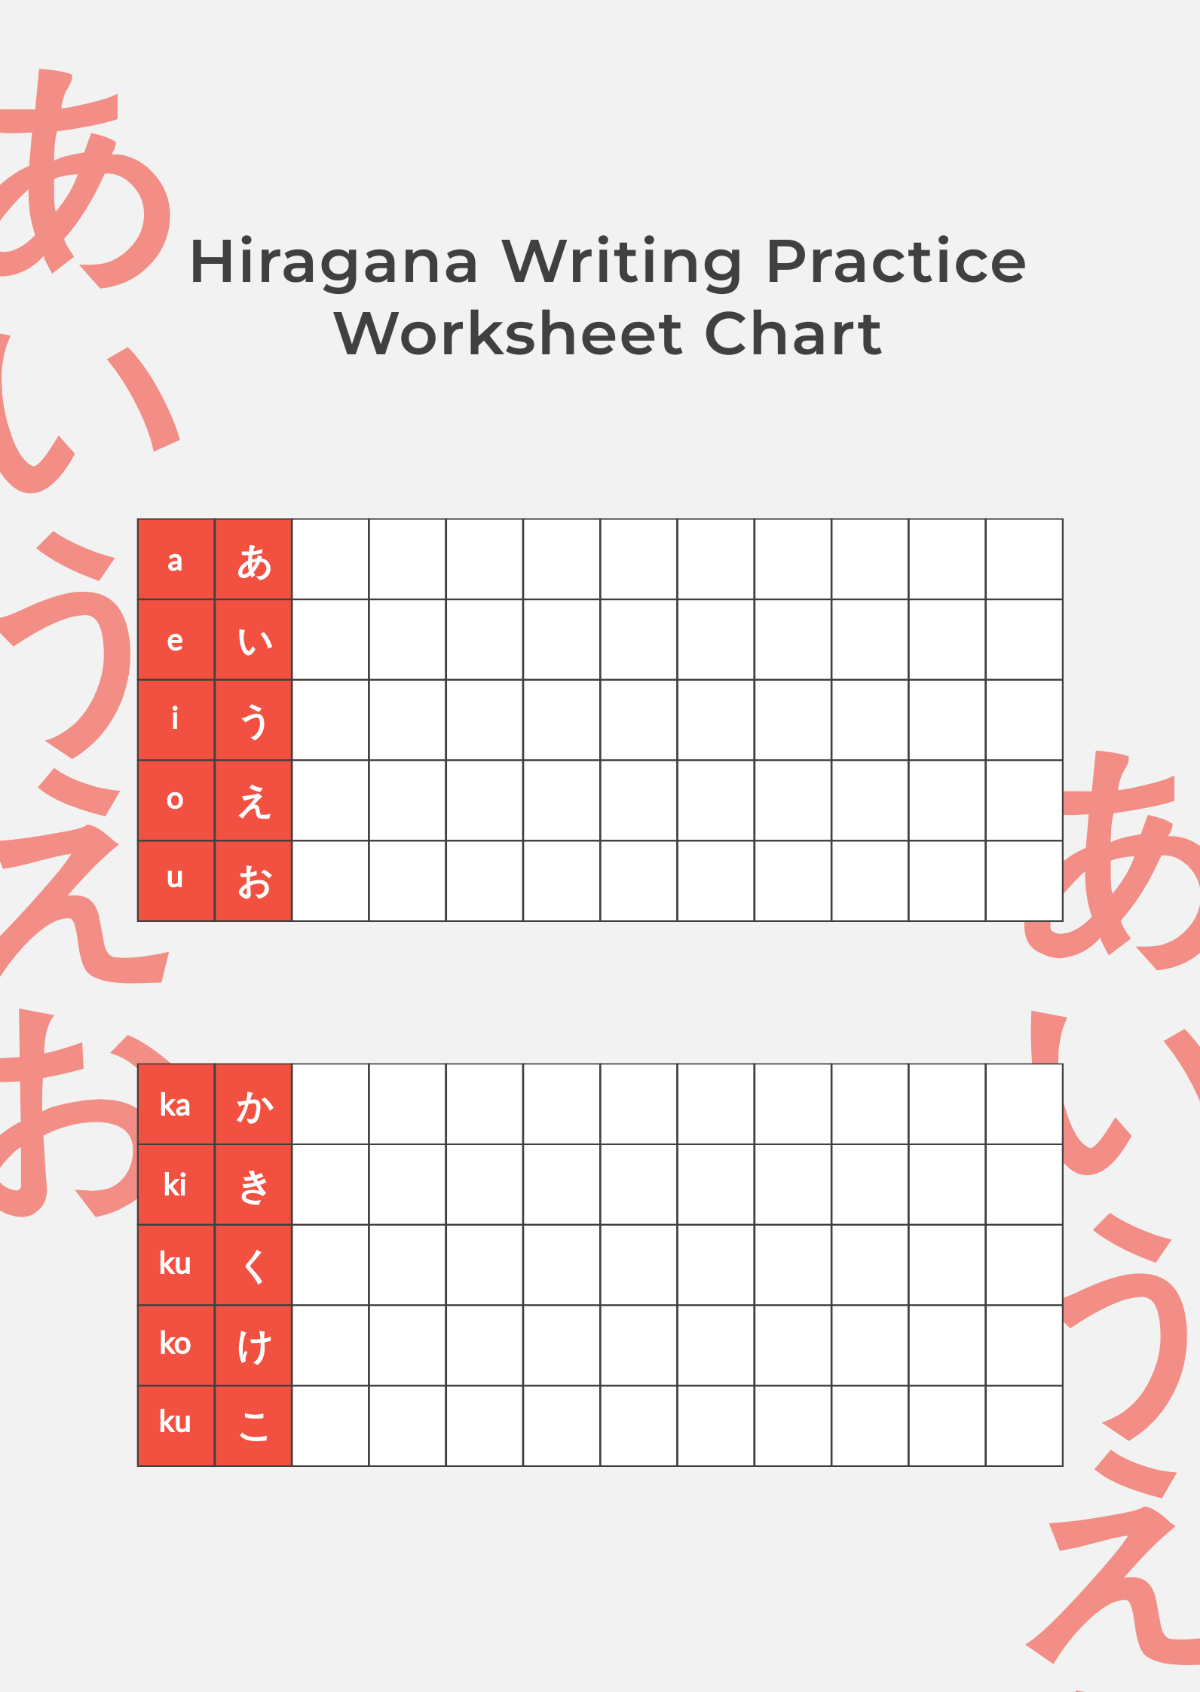 Hiragana Writing Practice Worksheet Chart